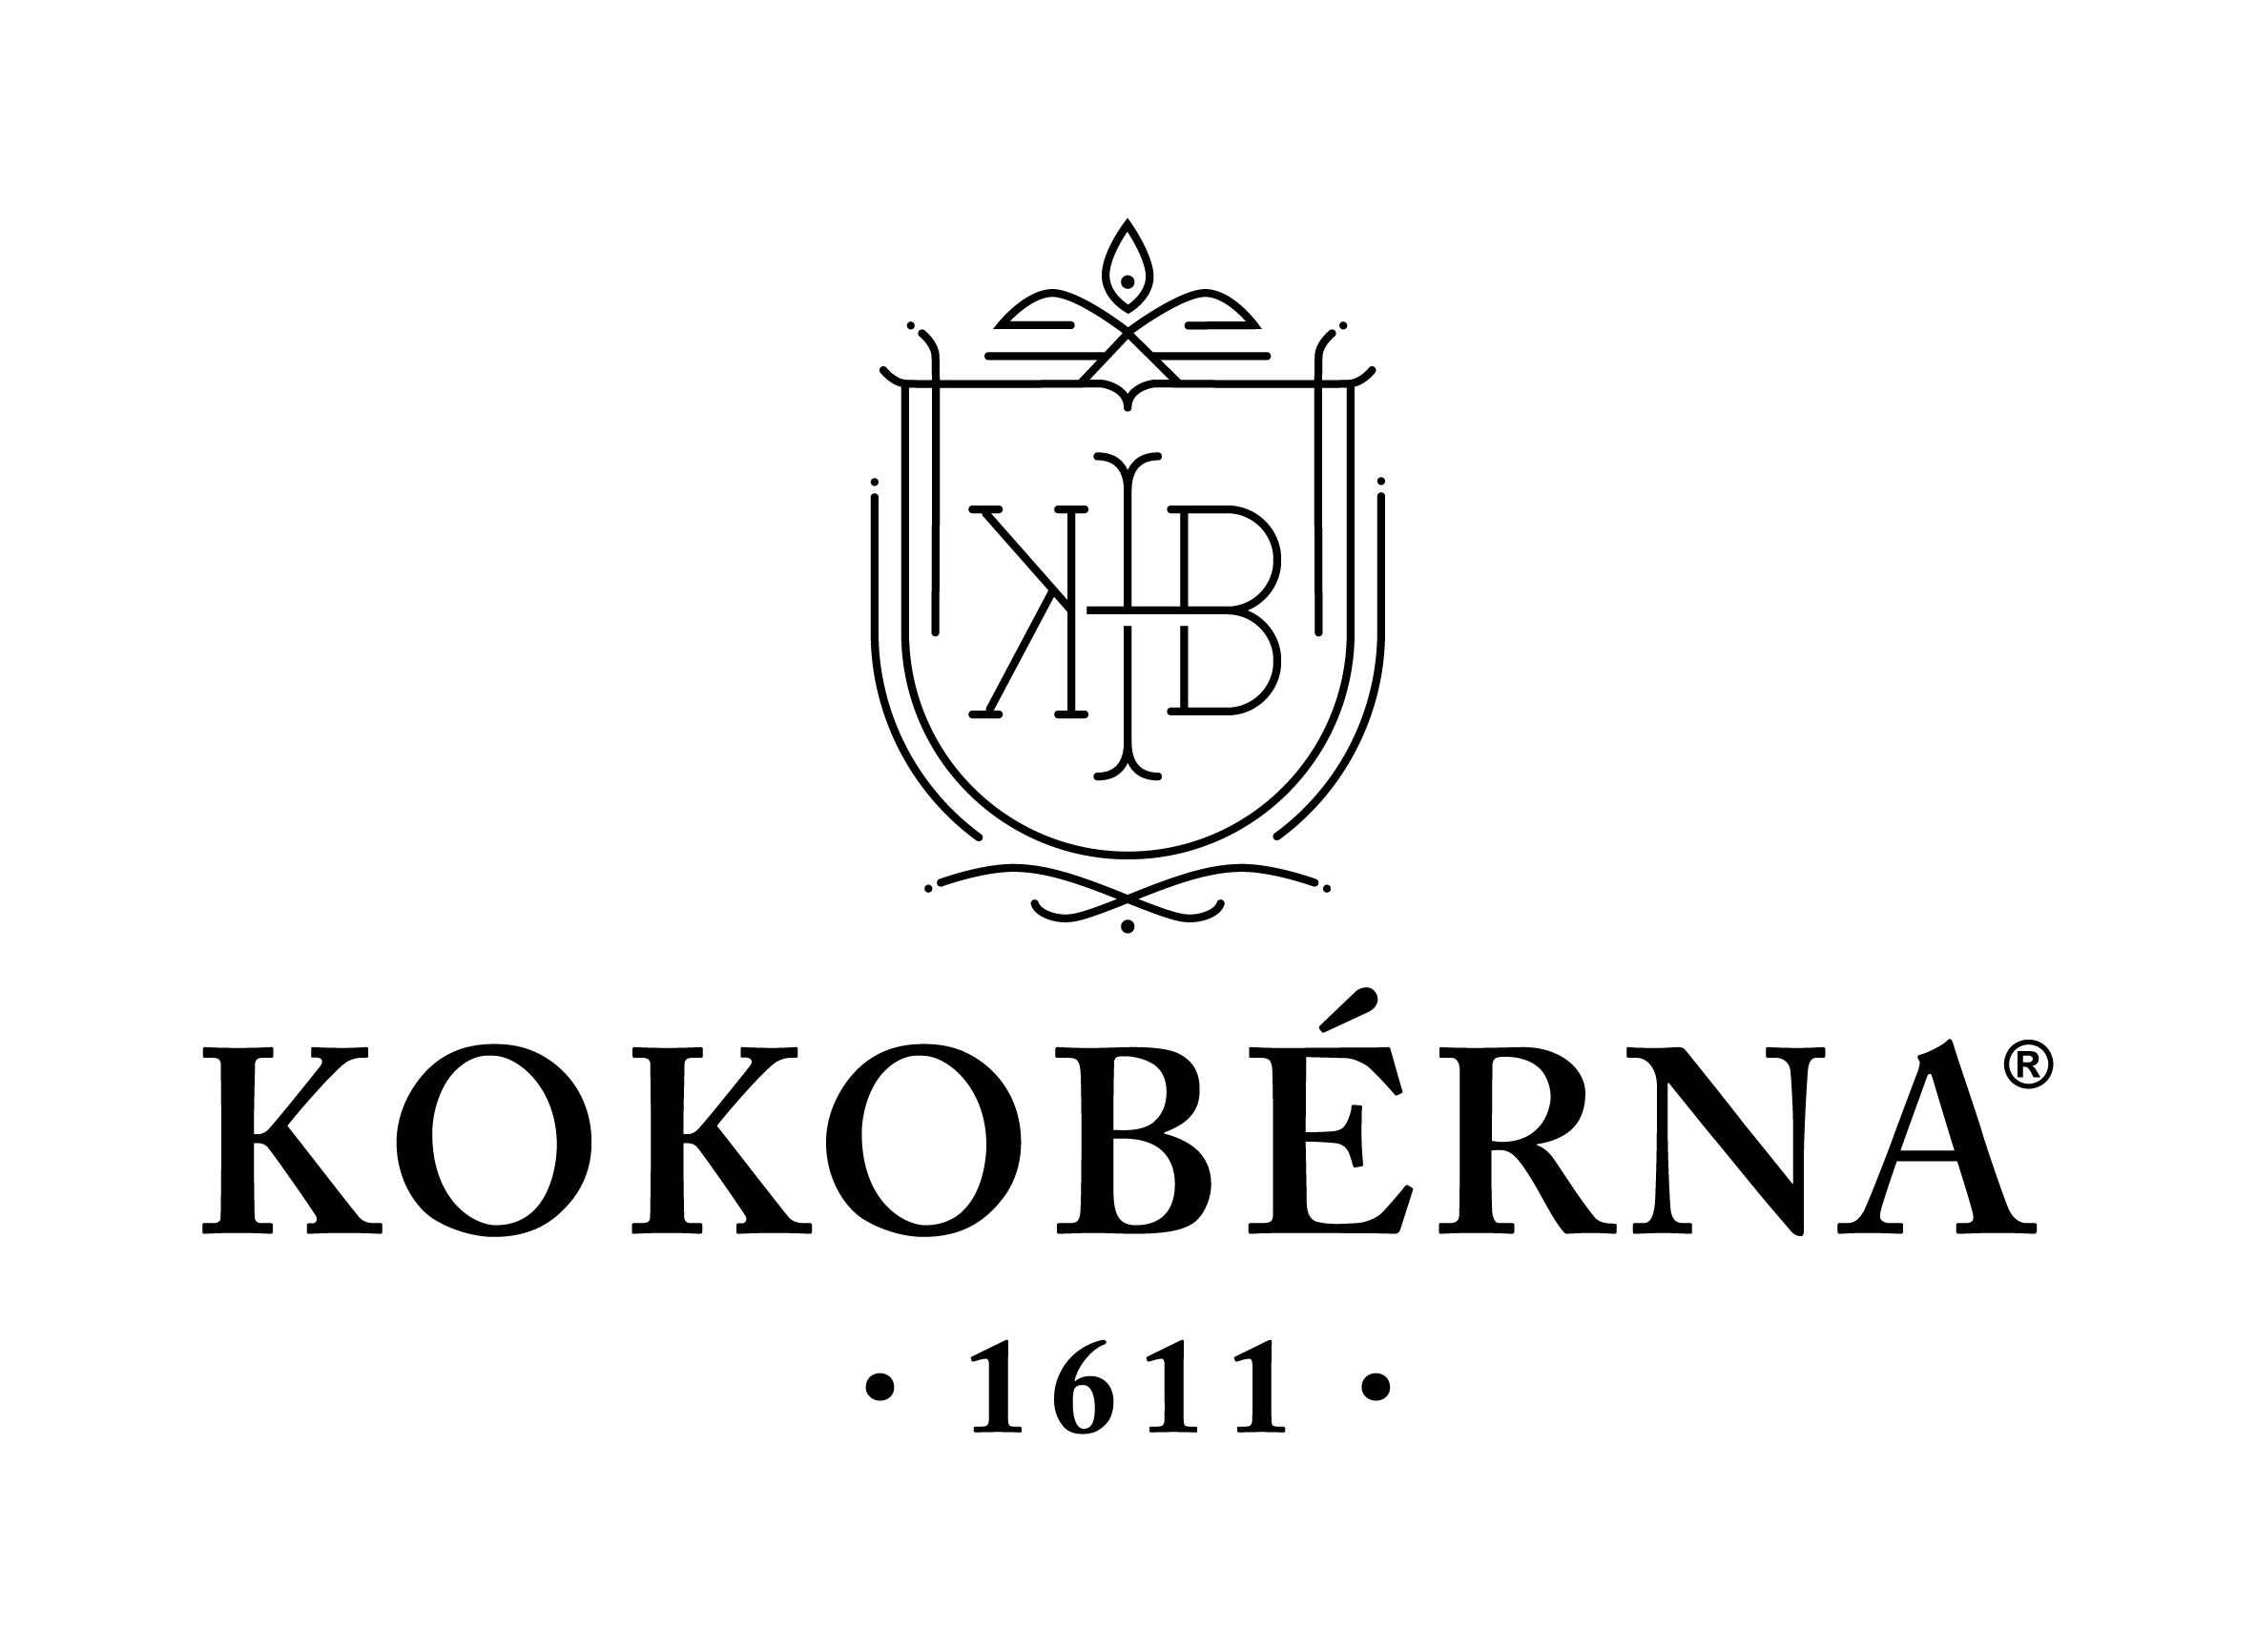 KOKOBÉRNA logo png